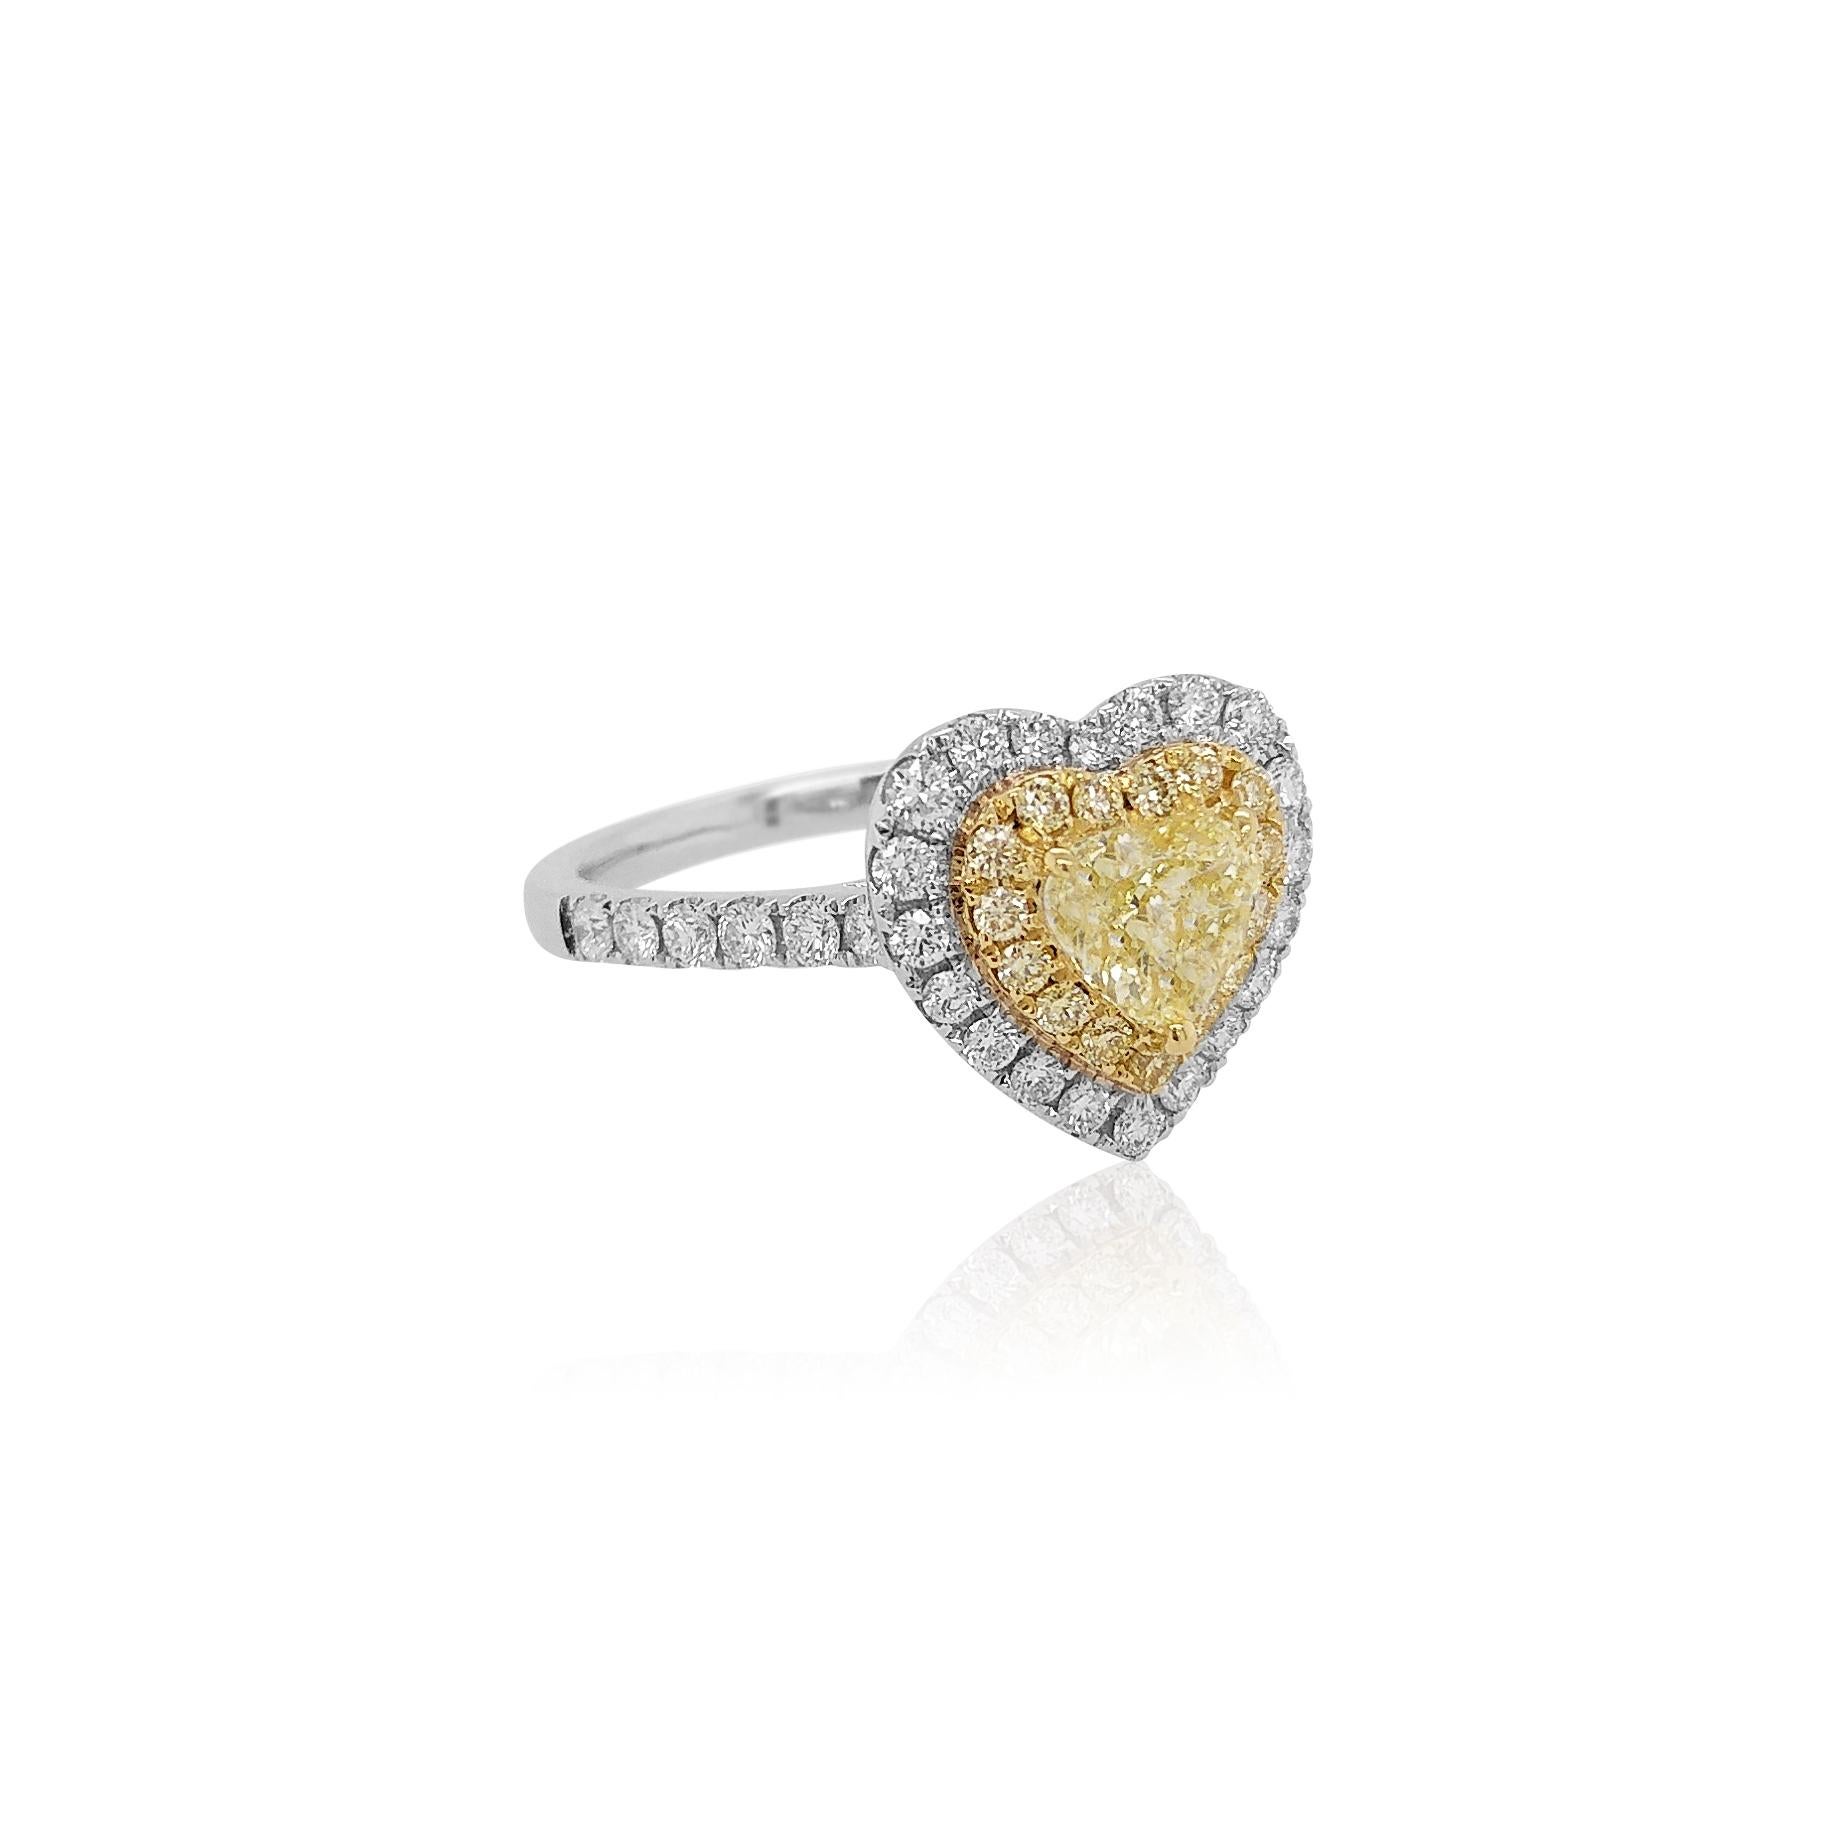 Heart Cut GIA Certified Fancy Yellow Diamond and White Diamond Ring in 18 Karat White Gold